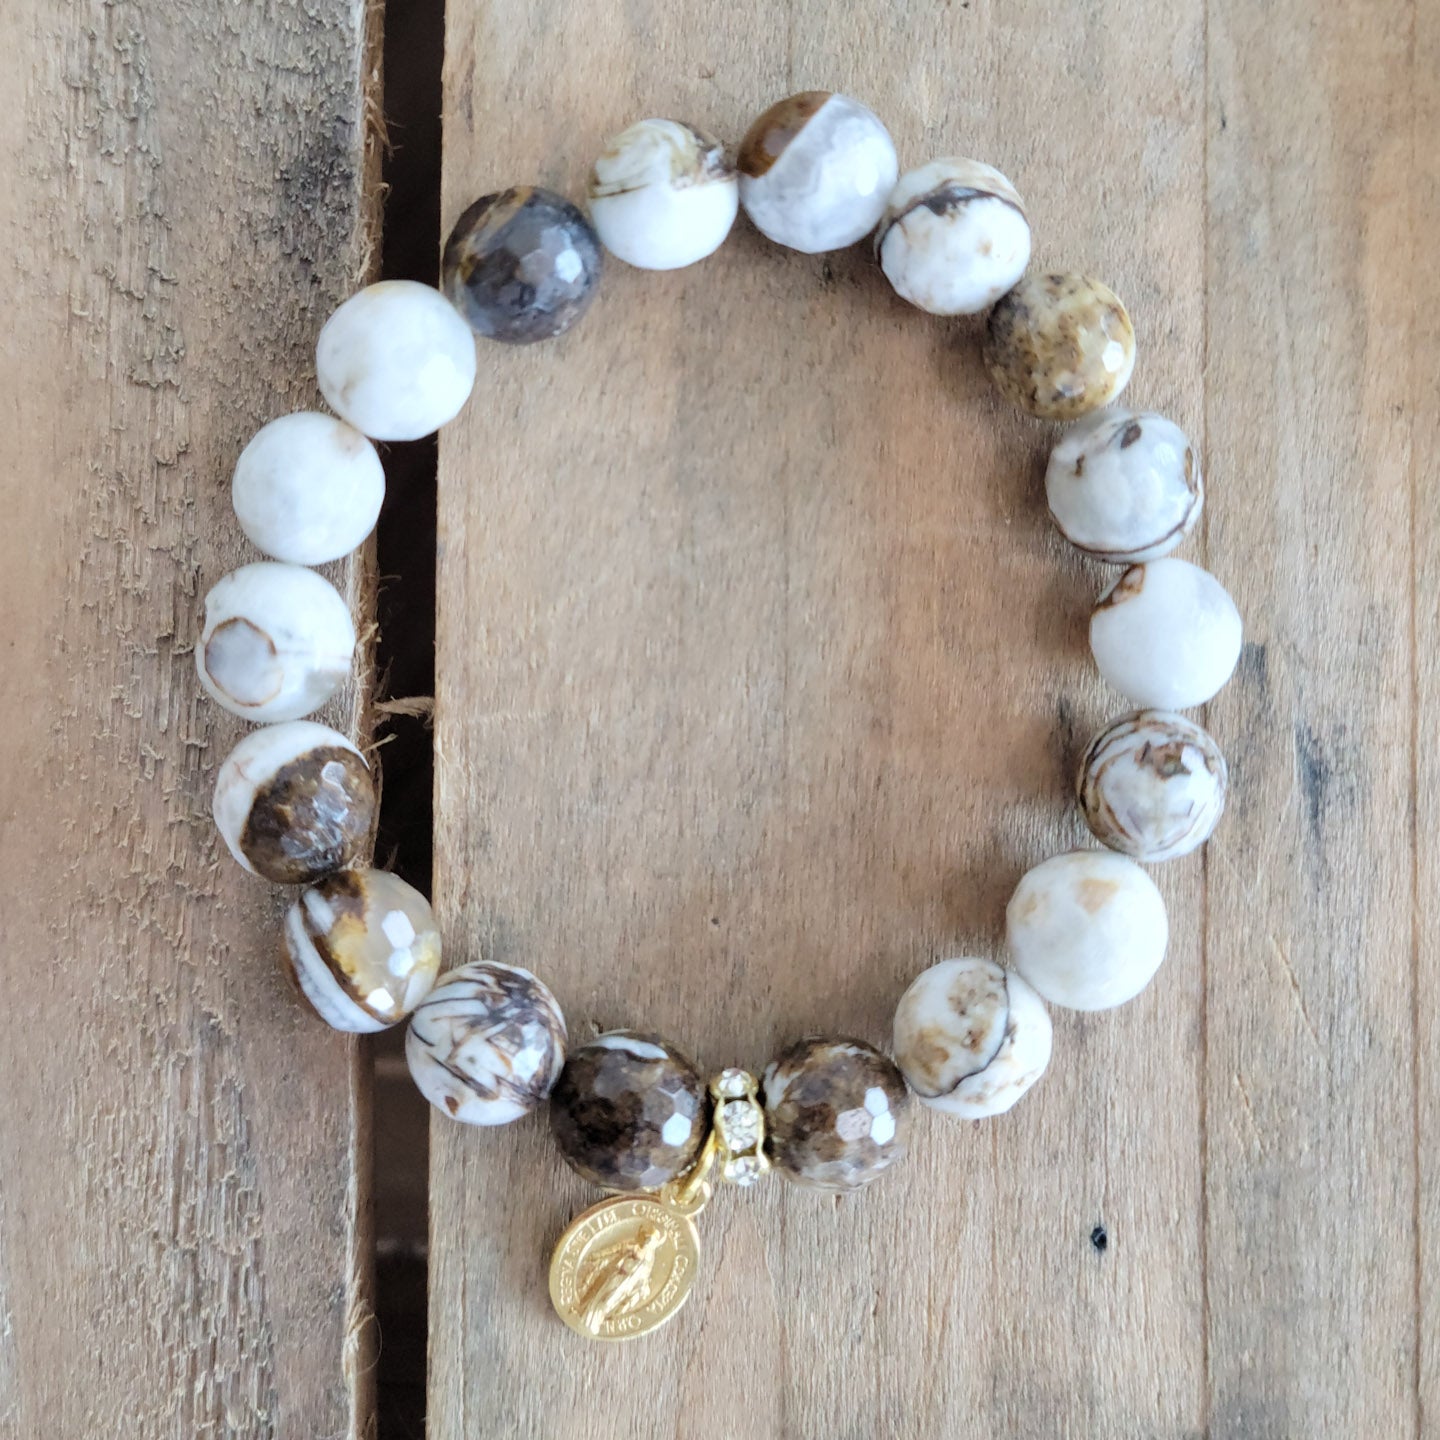 10mm swirled brown agate gemstone beads mini gold tone Miraculous Medal stretch bracelet